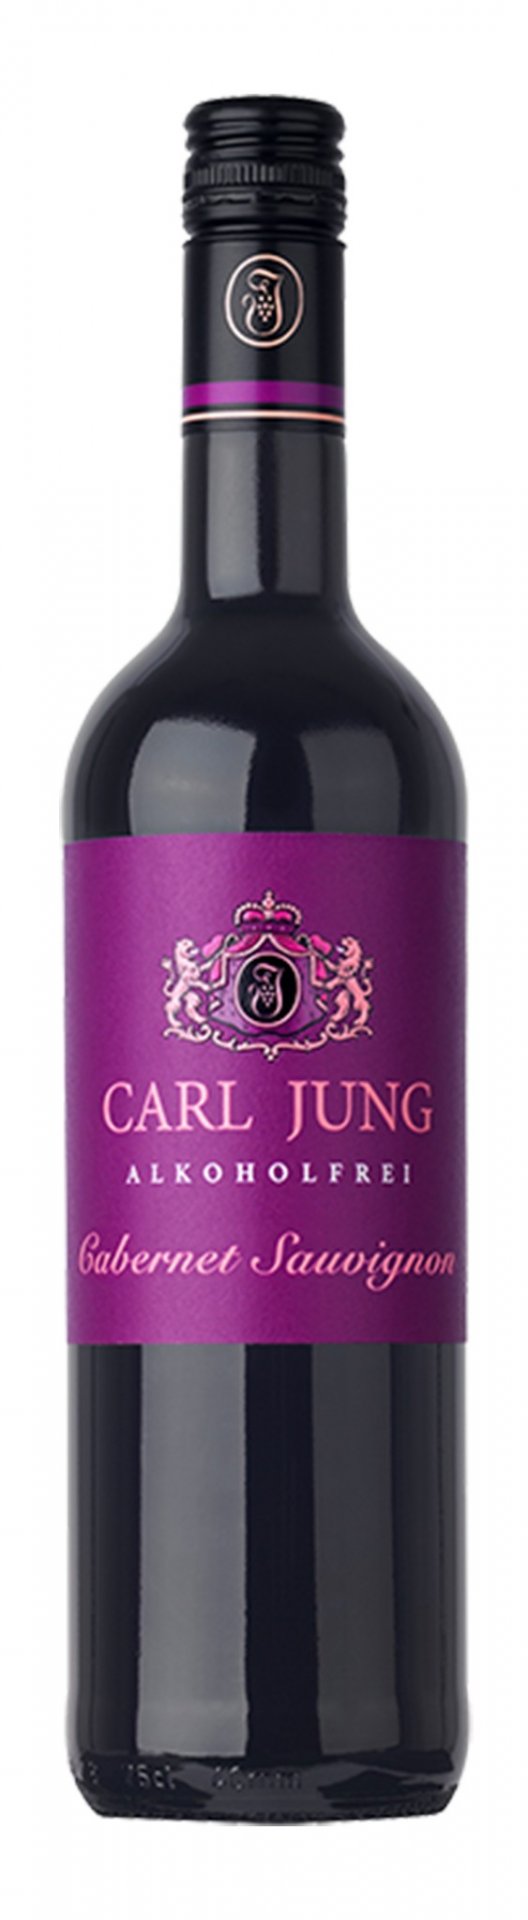 Carl Jung Cabernet Sauvignon Alcohol-free